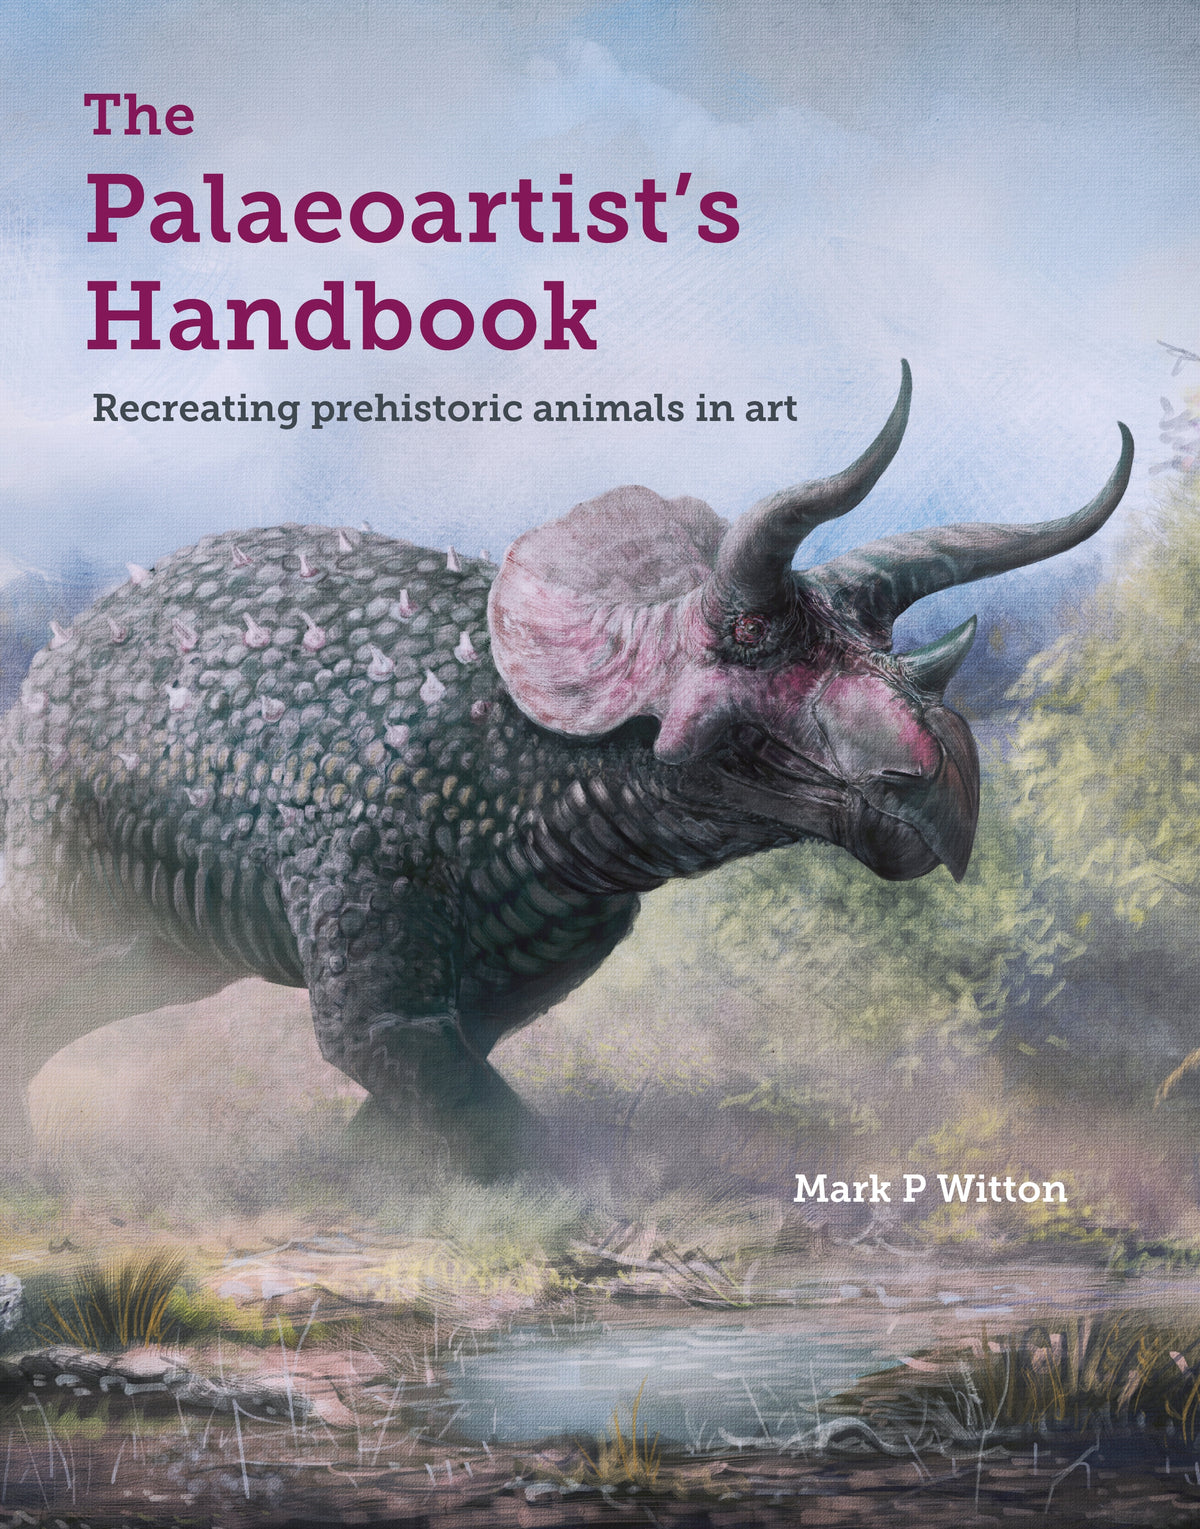 The Palaeoartist’s Handbook